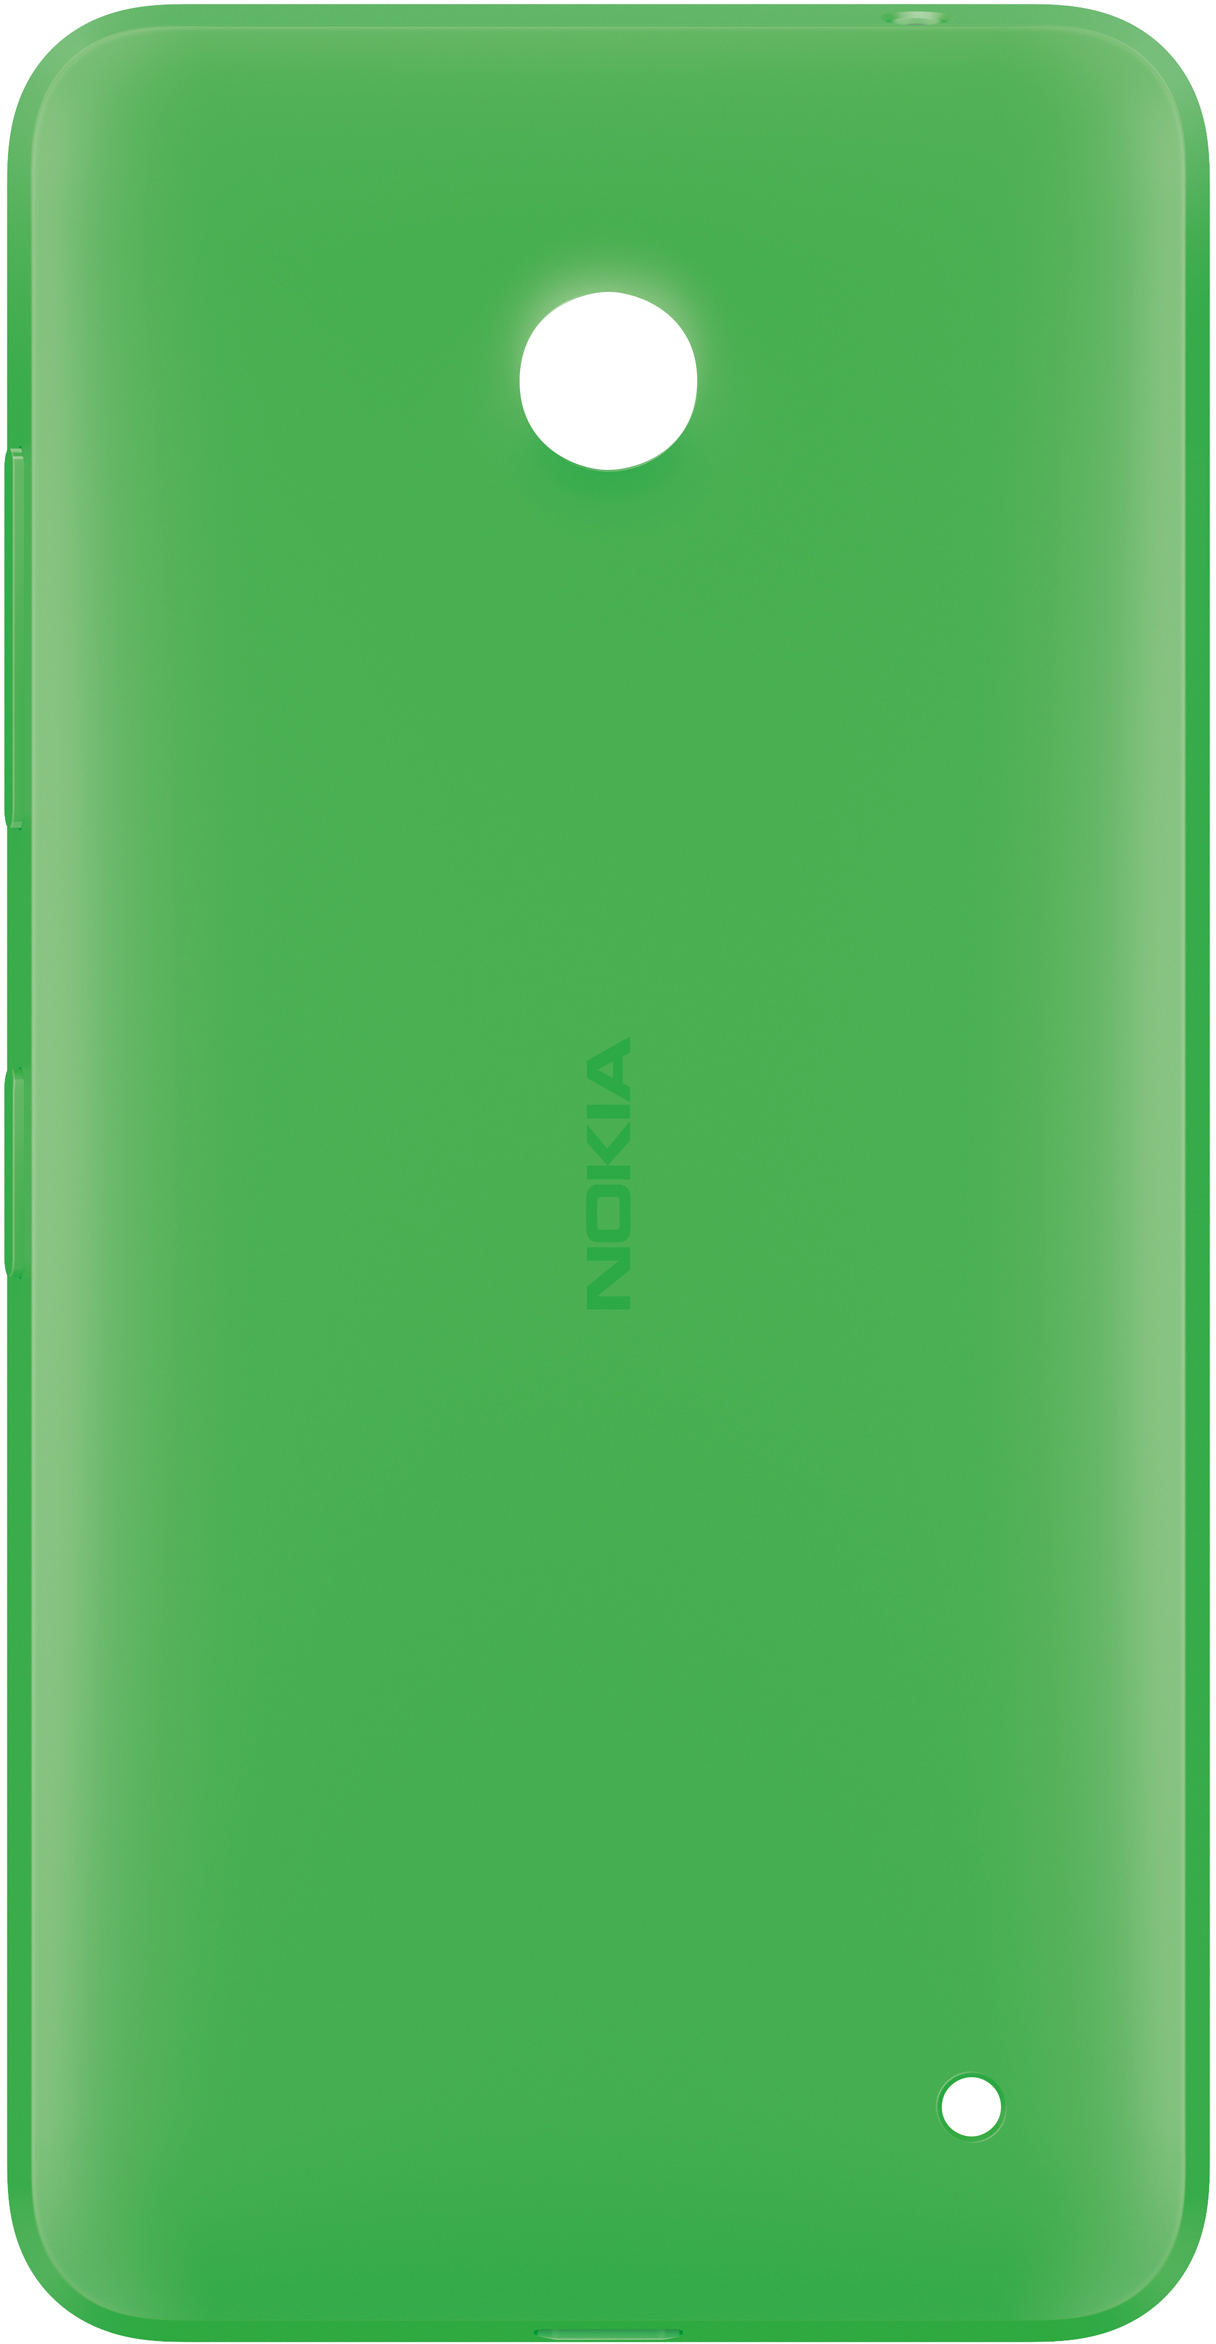 Backcover, CC 630, Lumia Shell, 3079 Lumia NOKIA Nokia, Grün 635,